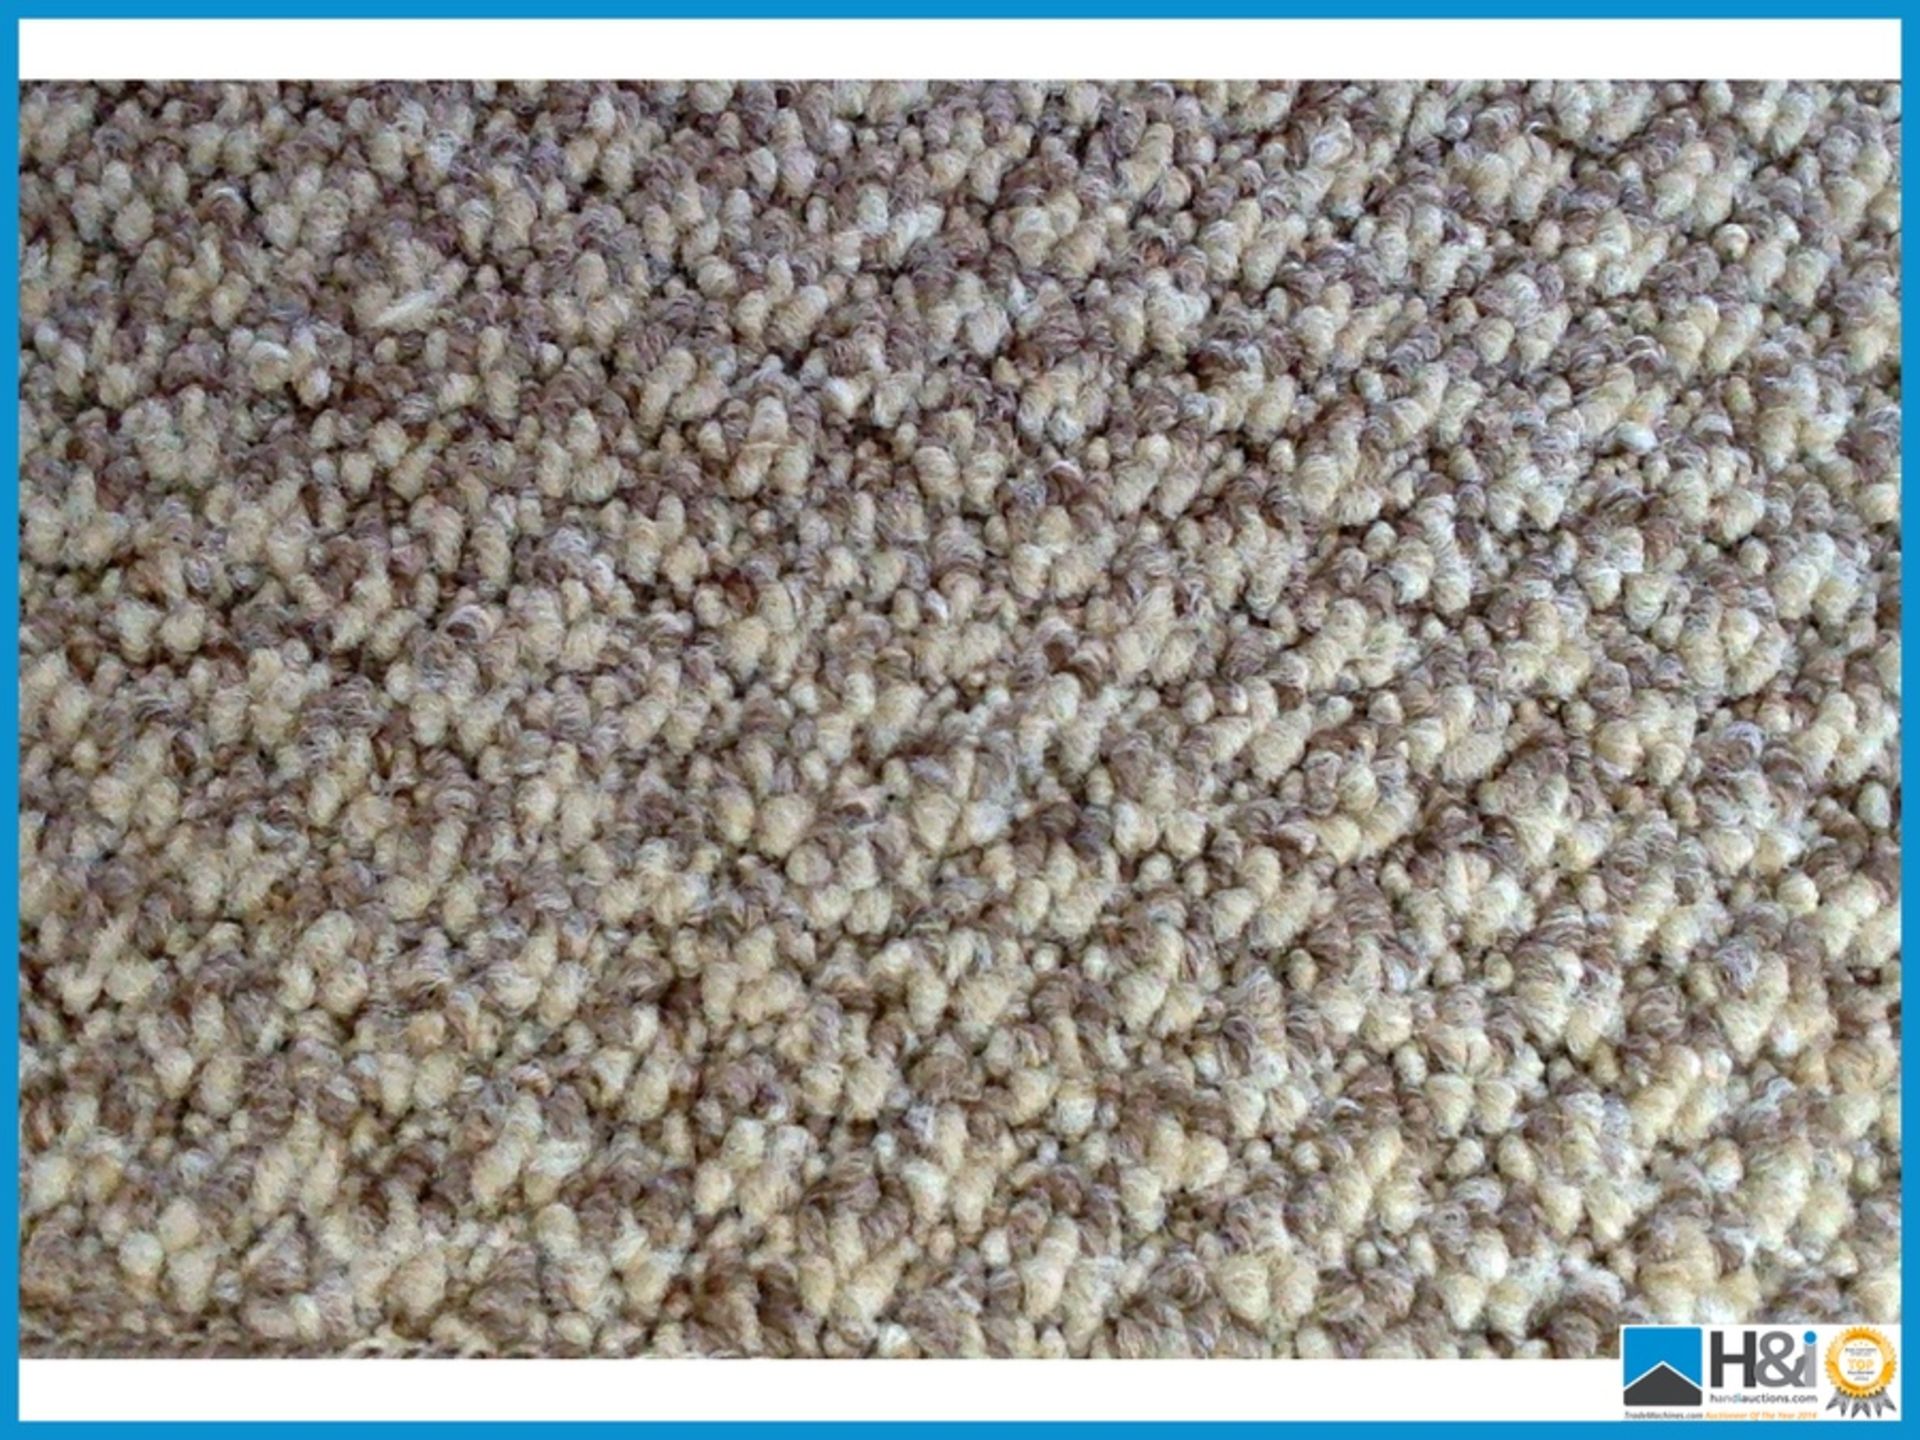 Landlords Special Heavy Domestic Budget Carpeting - Dark Beige. 17.5m x 4m - Total 70m2 Appraisal: